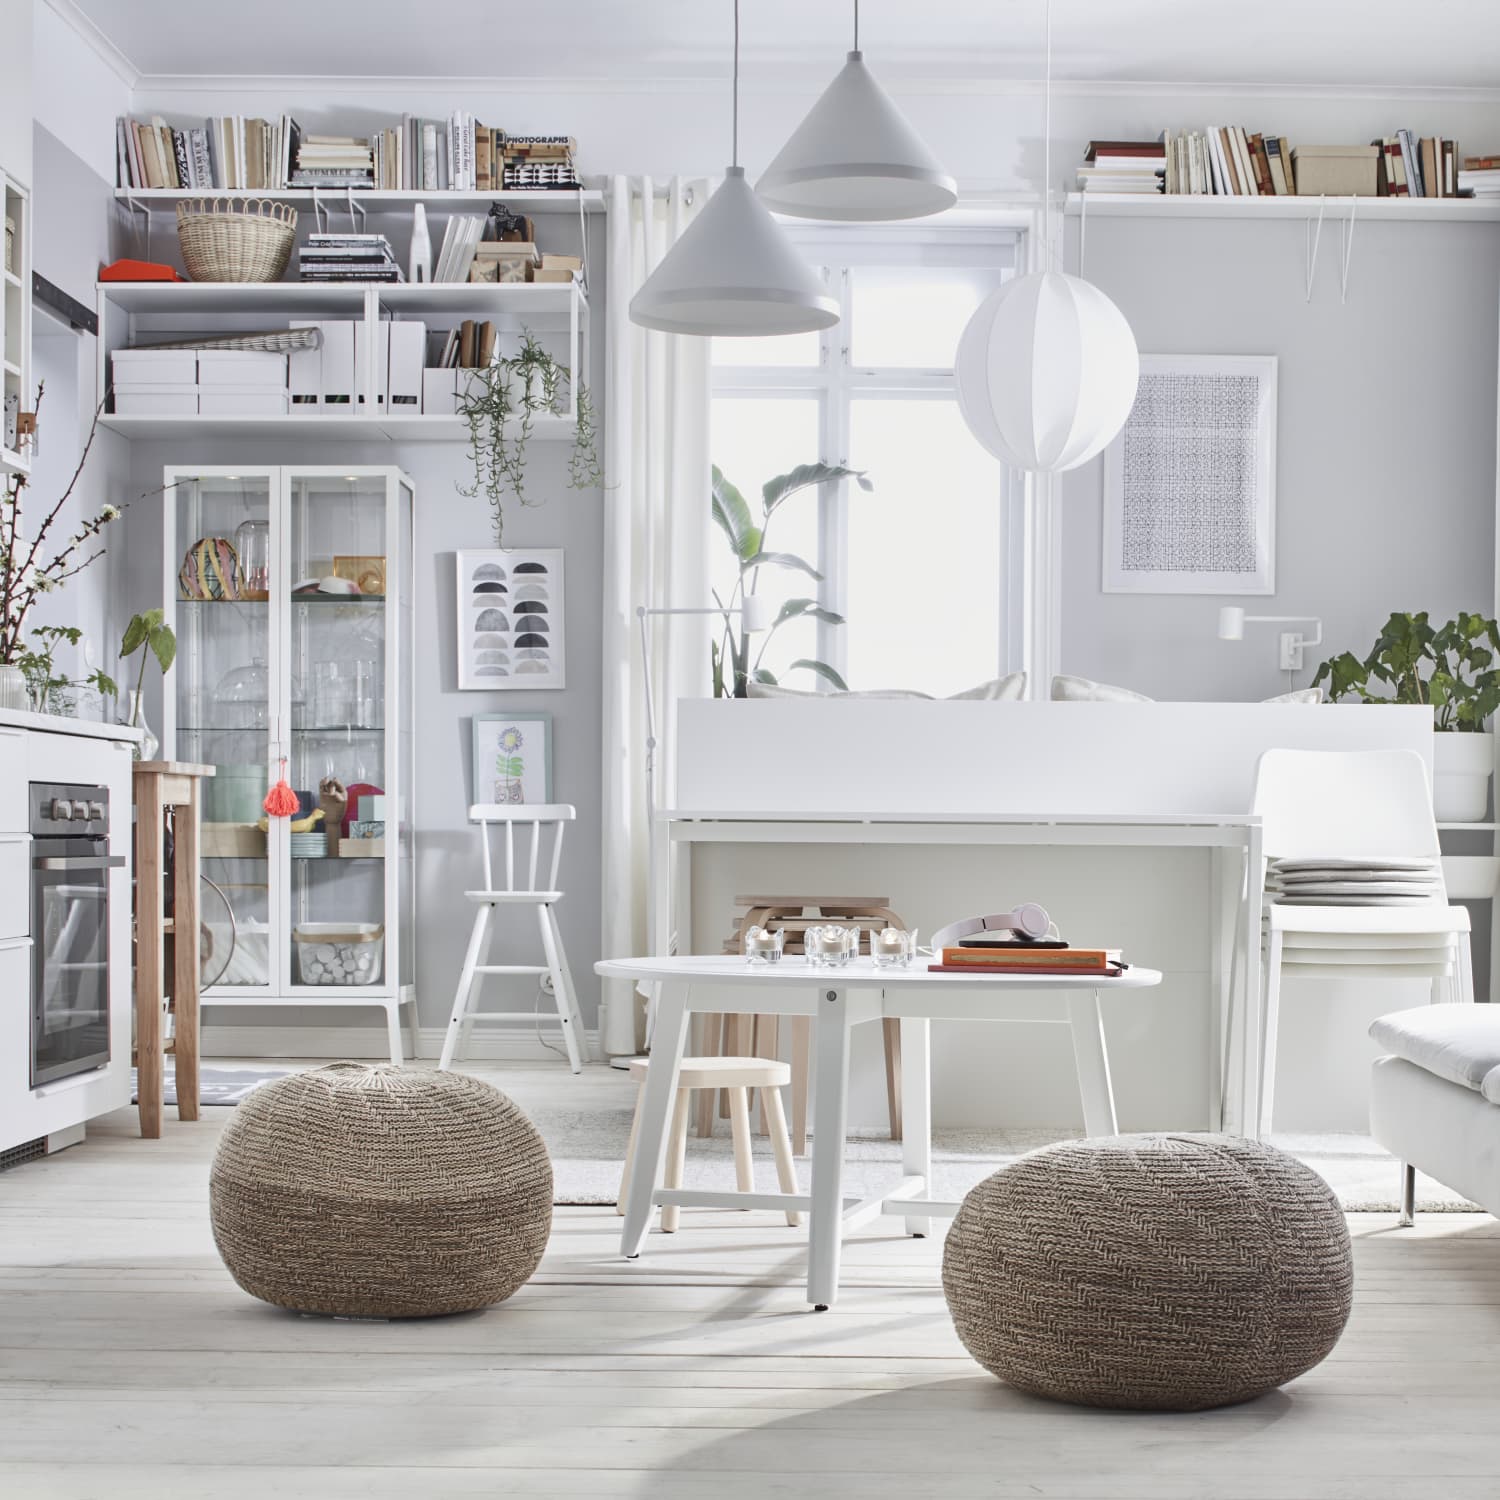 Storage ideas to maximize a small space - IKEA